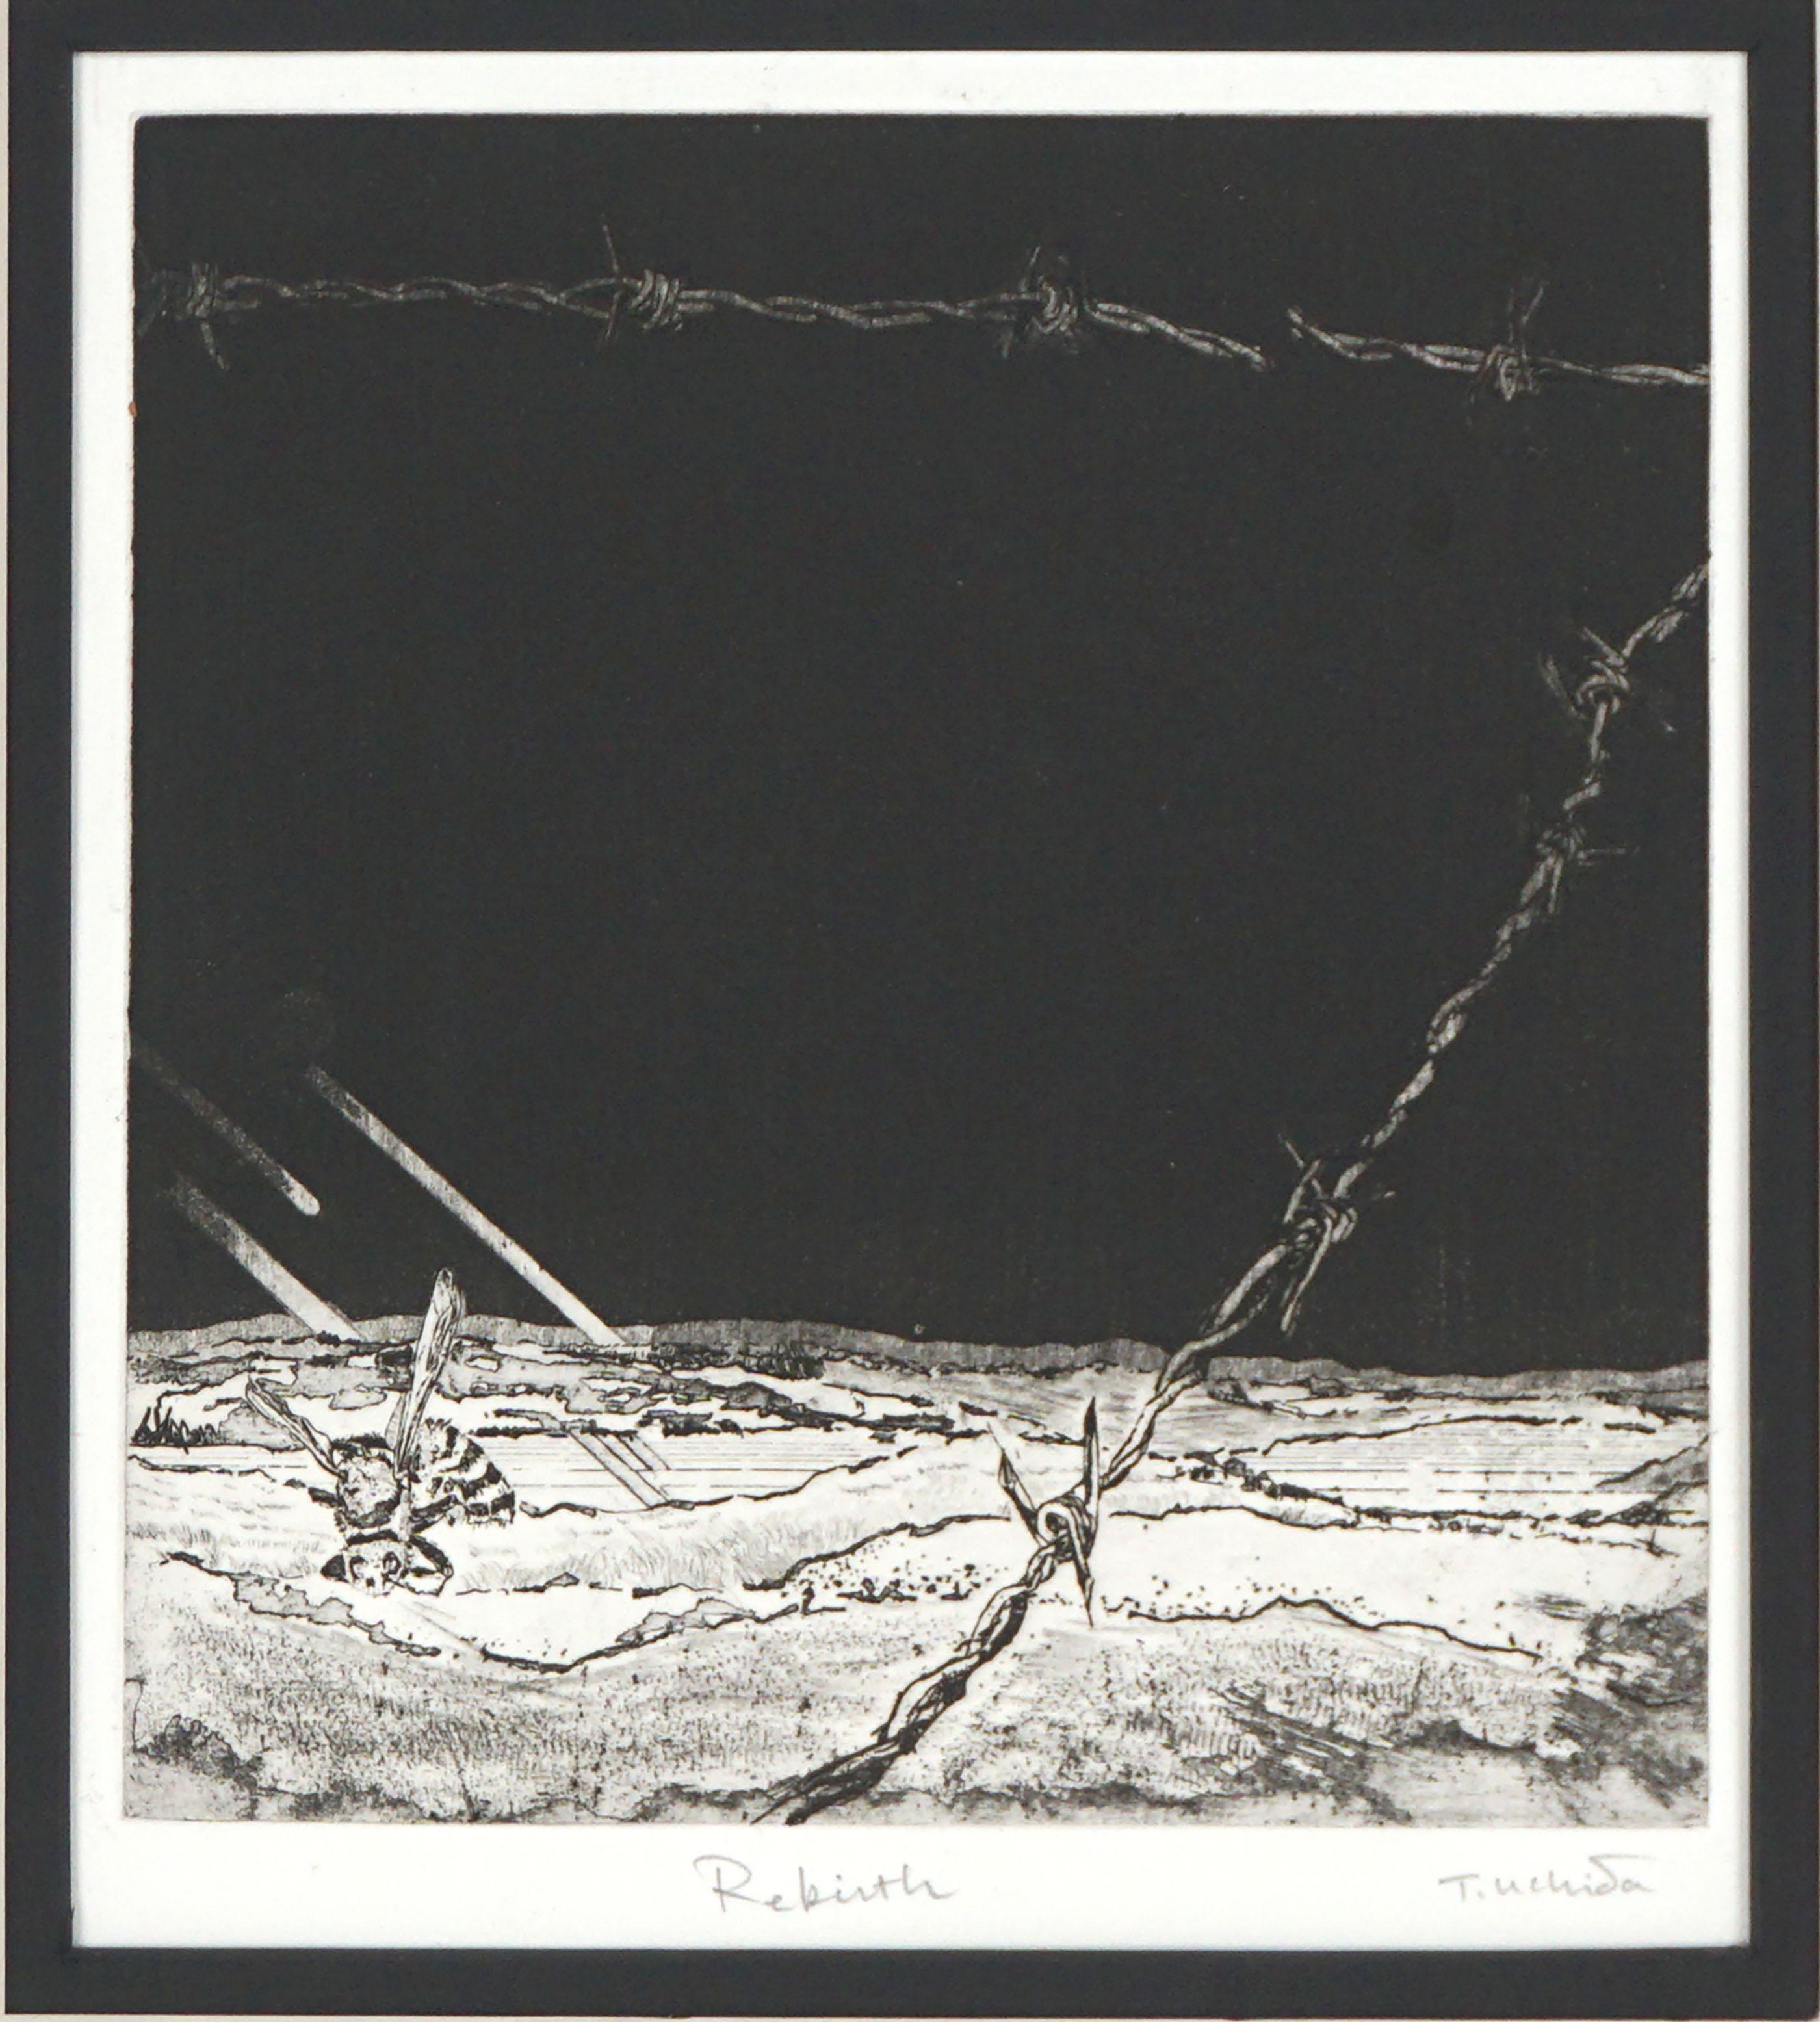 Tomoya Uchida Abstract Print - "Rebirth" Honey Bee and Barbed Wire - Intaglio Print